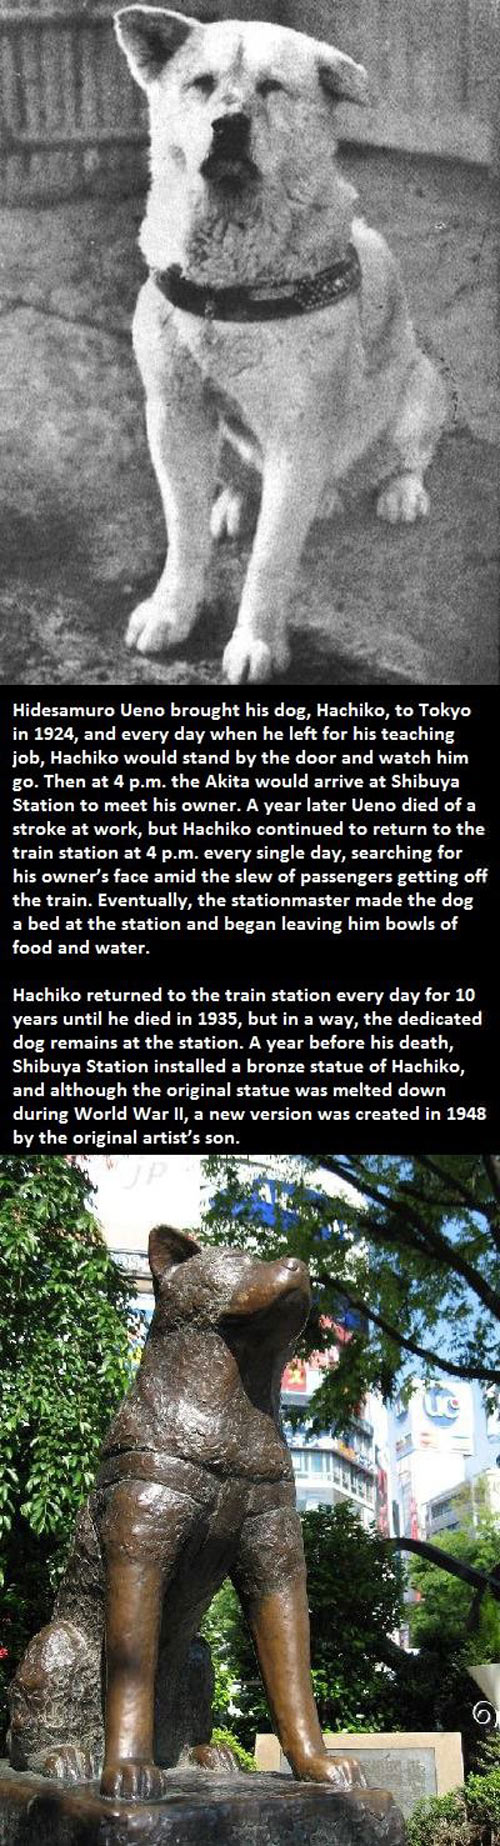 Hachiko, the good dog.